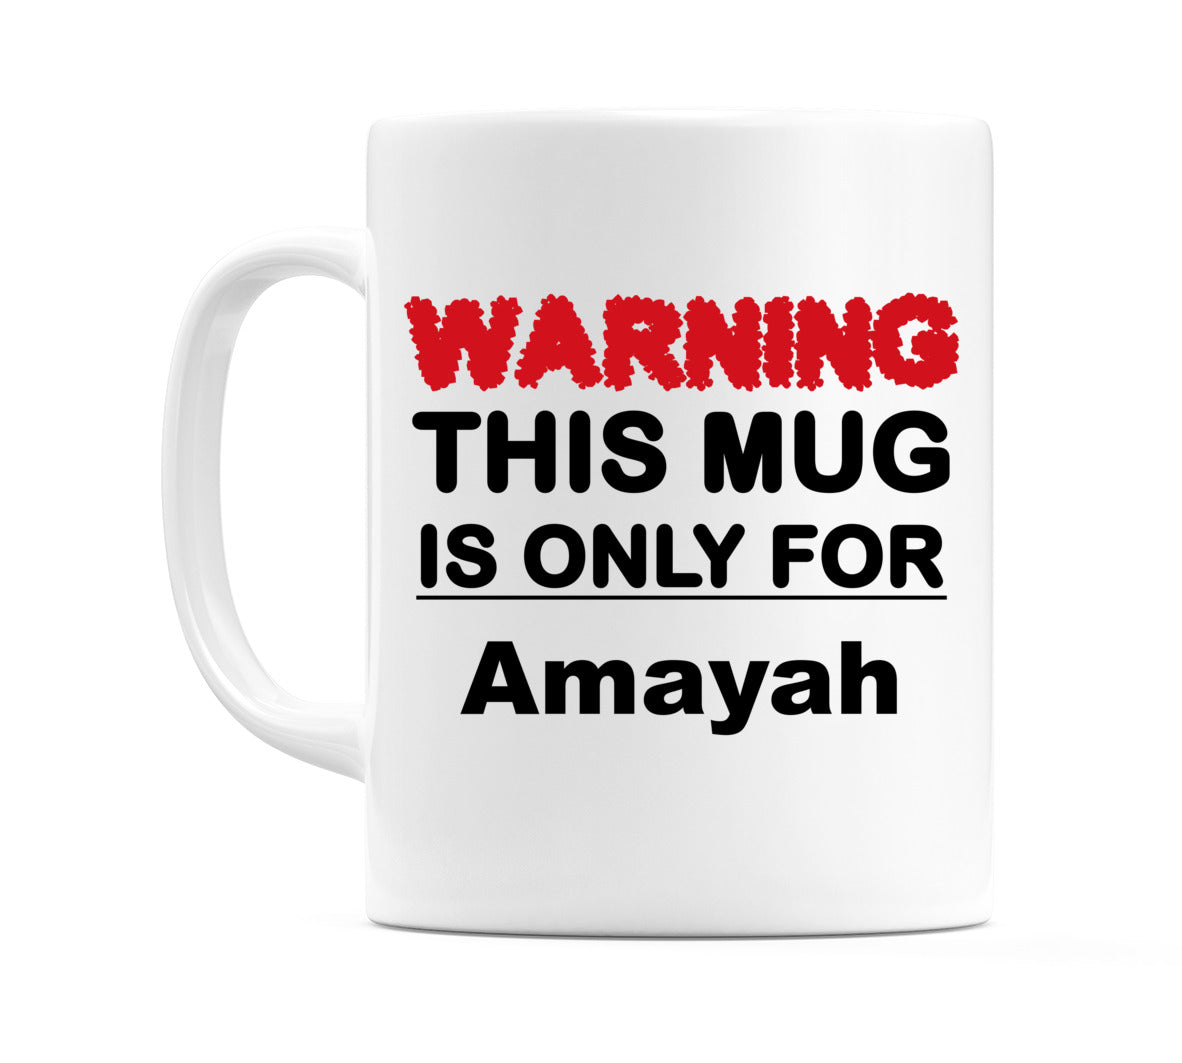 Warning This Mug is ONLY for Amayah Mug